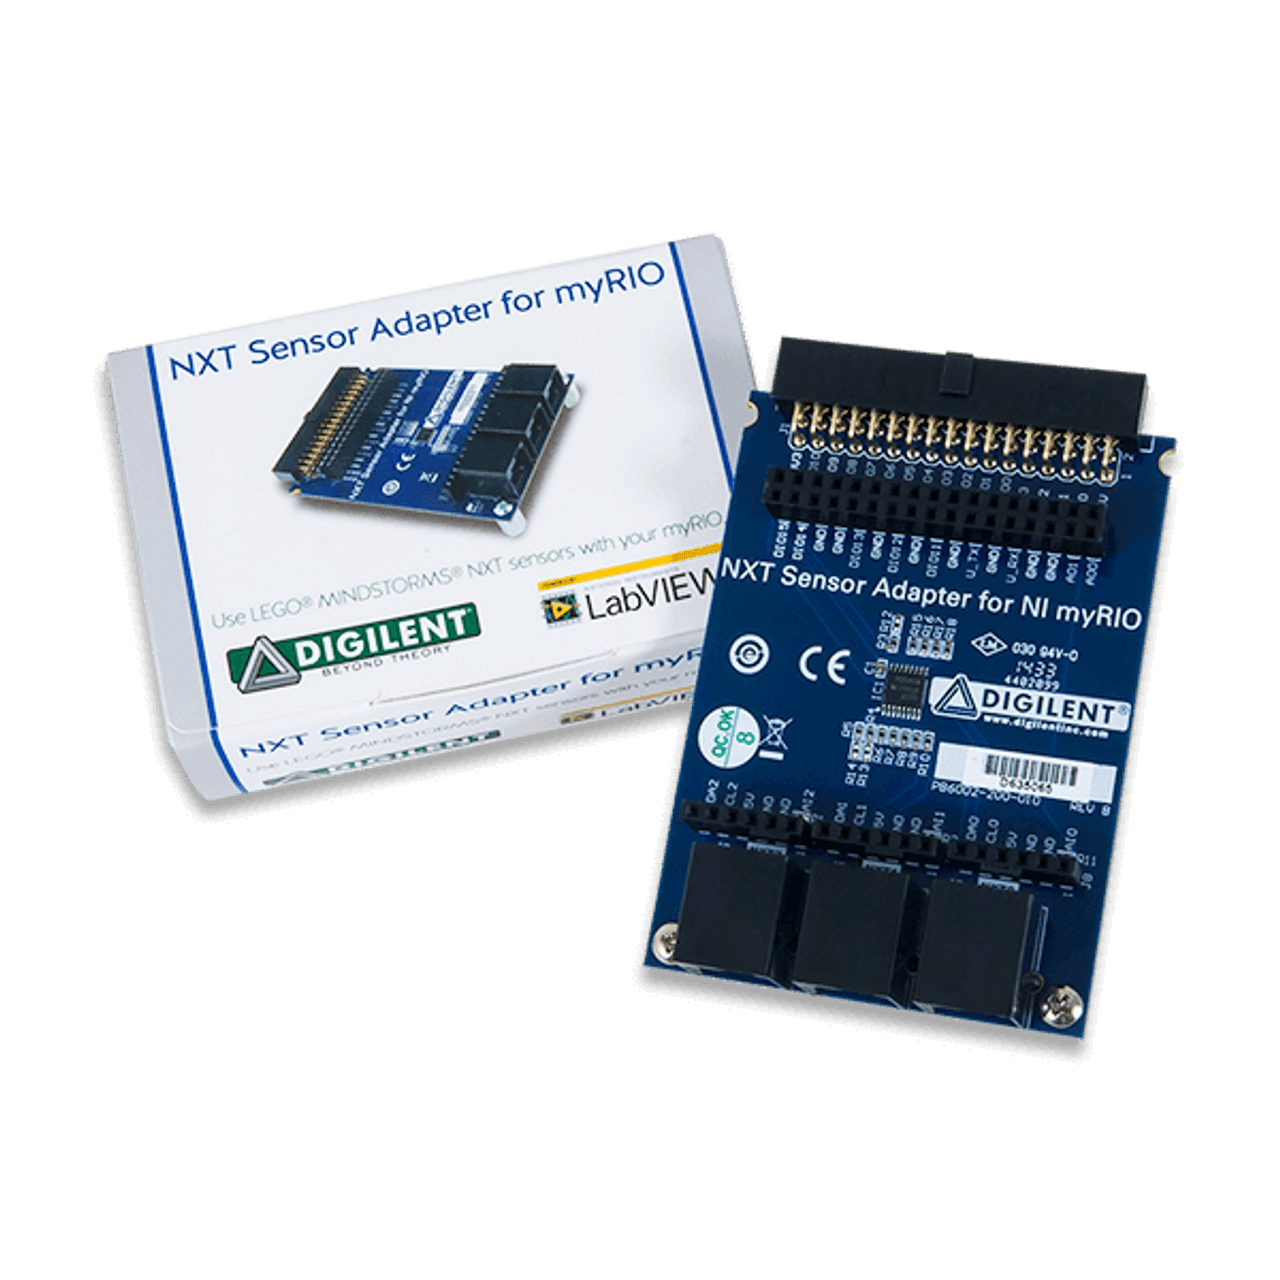 NXT Sensor Adapter for NI myRIO - Digilent